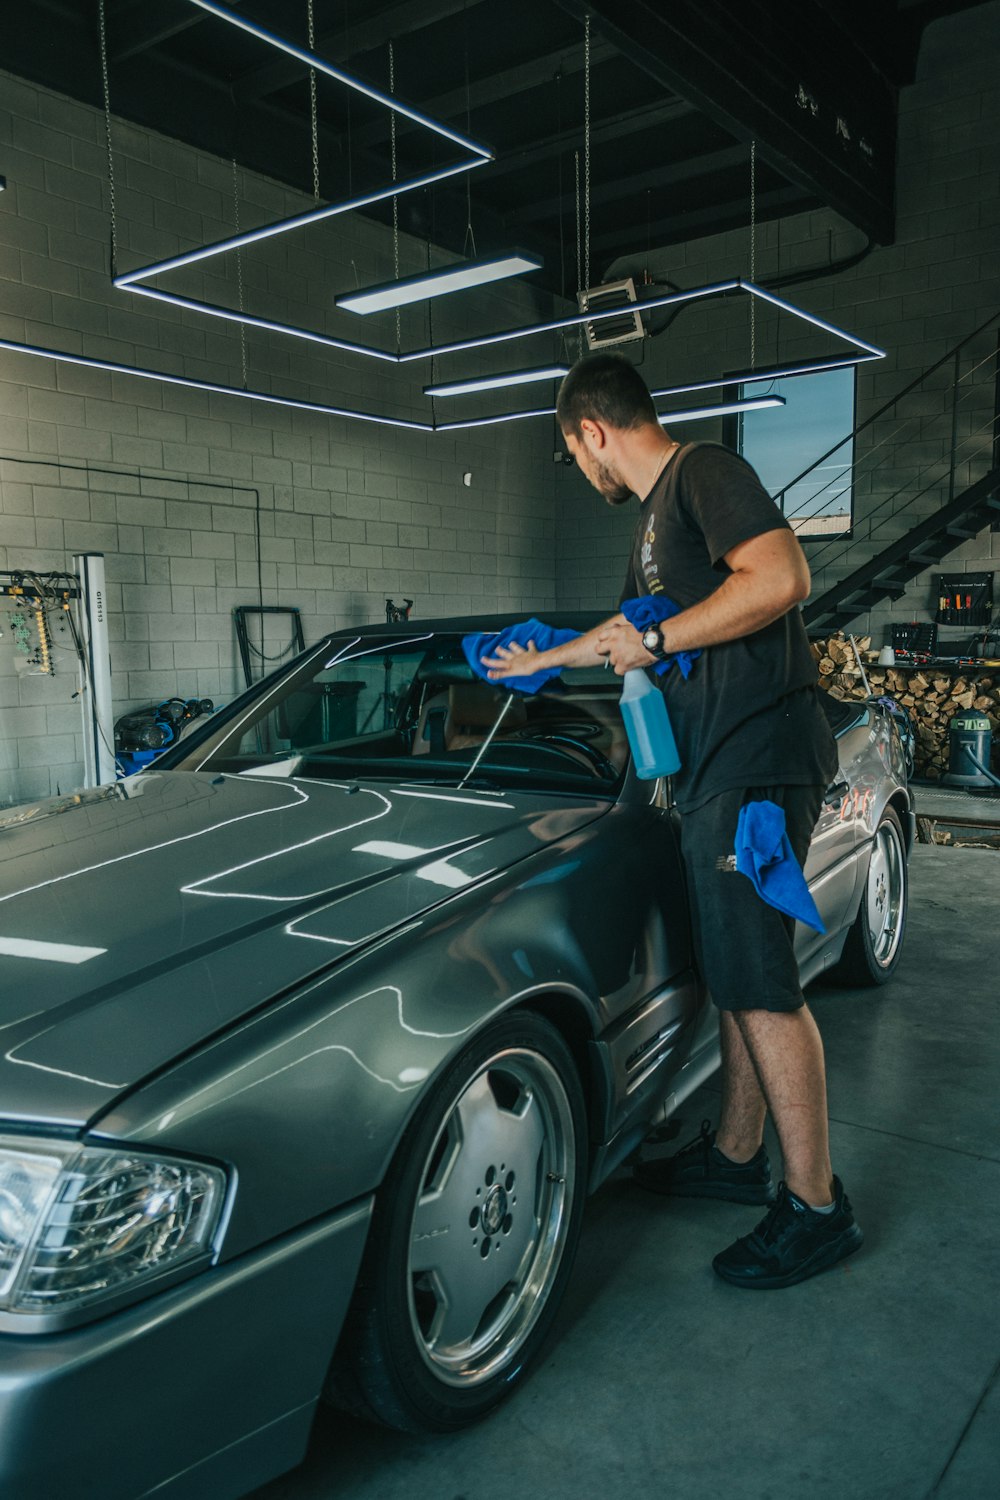 a man waxing a car in a garage